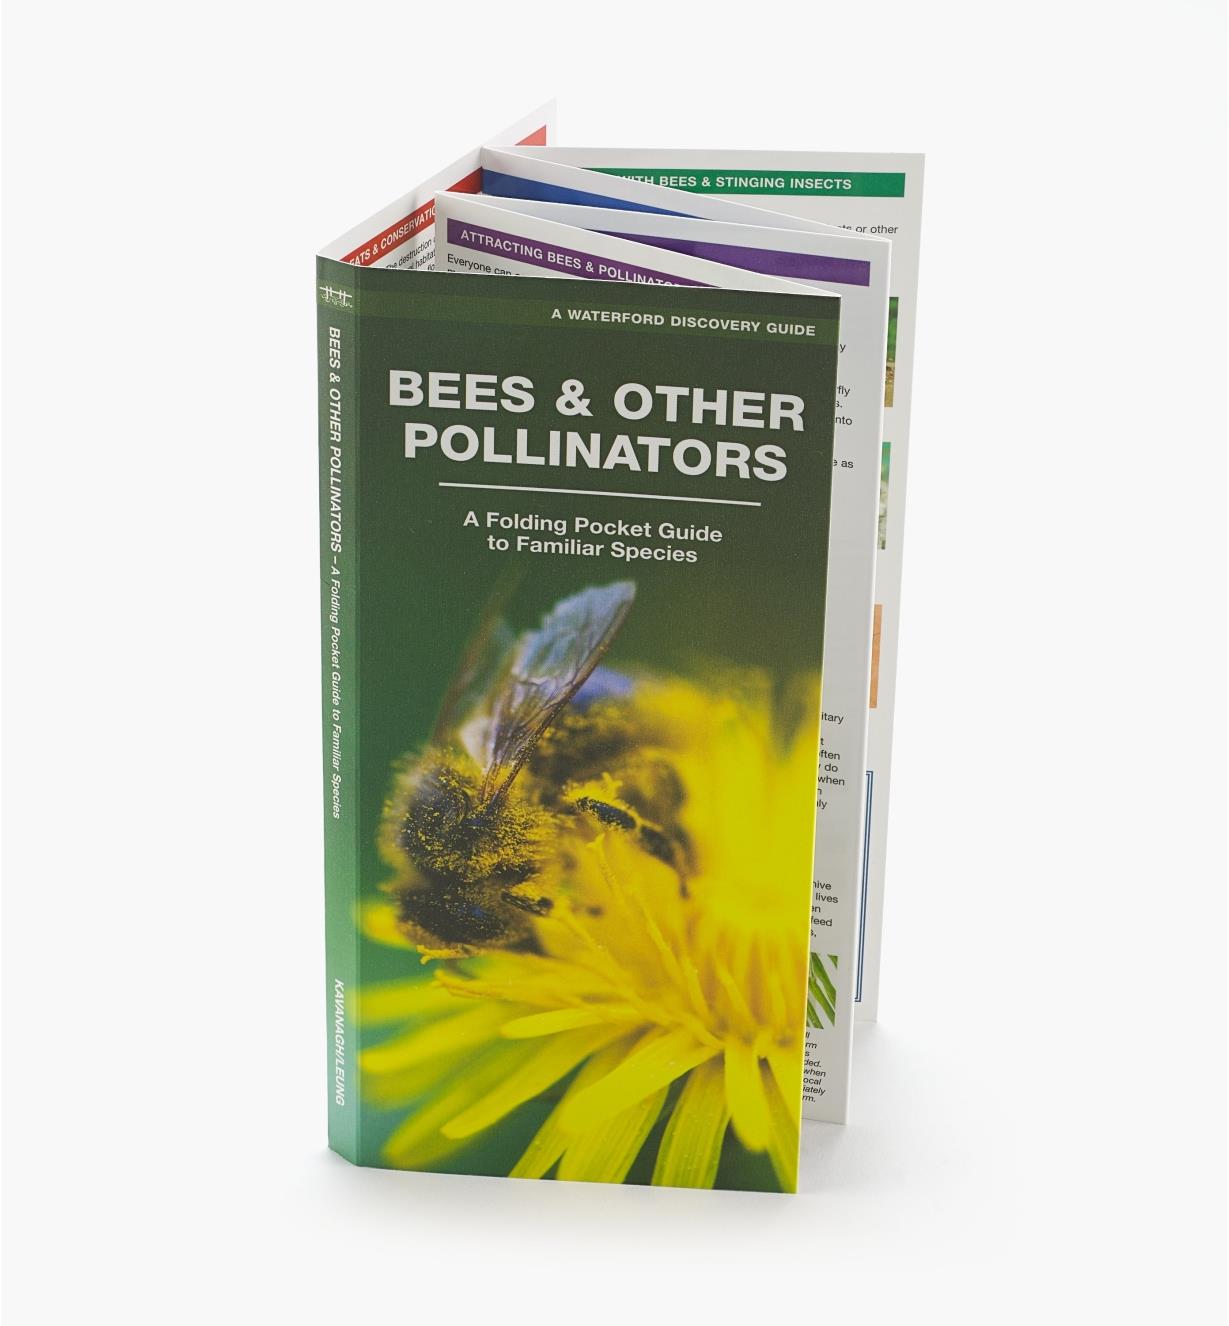 LA272 - Bees & Other Pollinators Pocket Guide